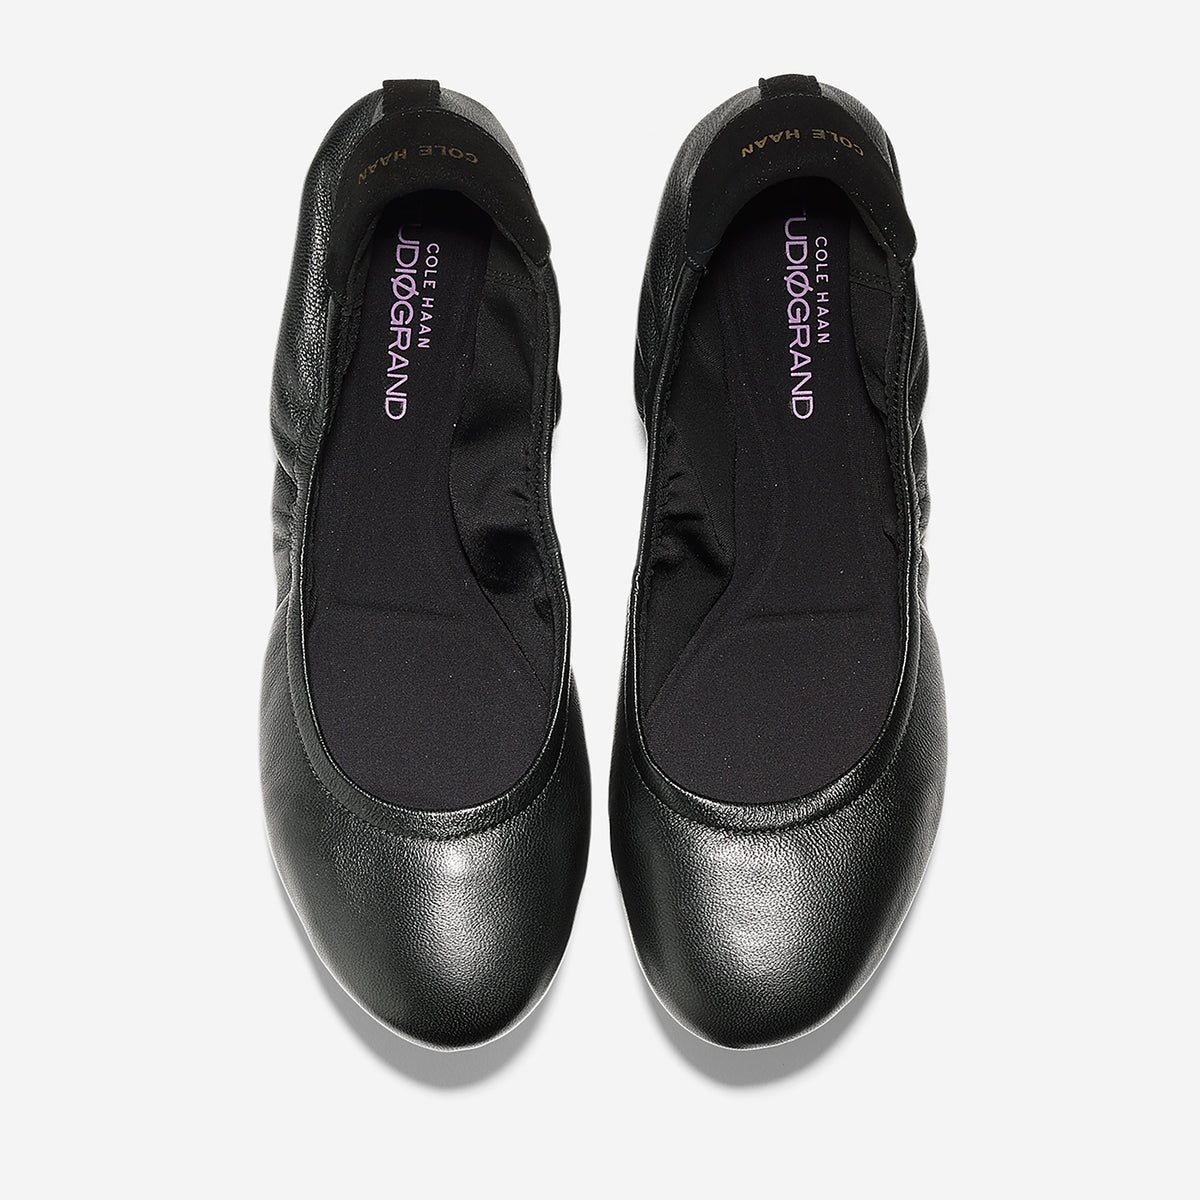 ColeHaan-StudiøGrand Packable Ballet Flat-w08323-Black Leather-Black